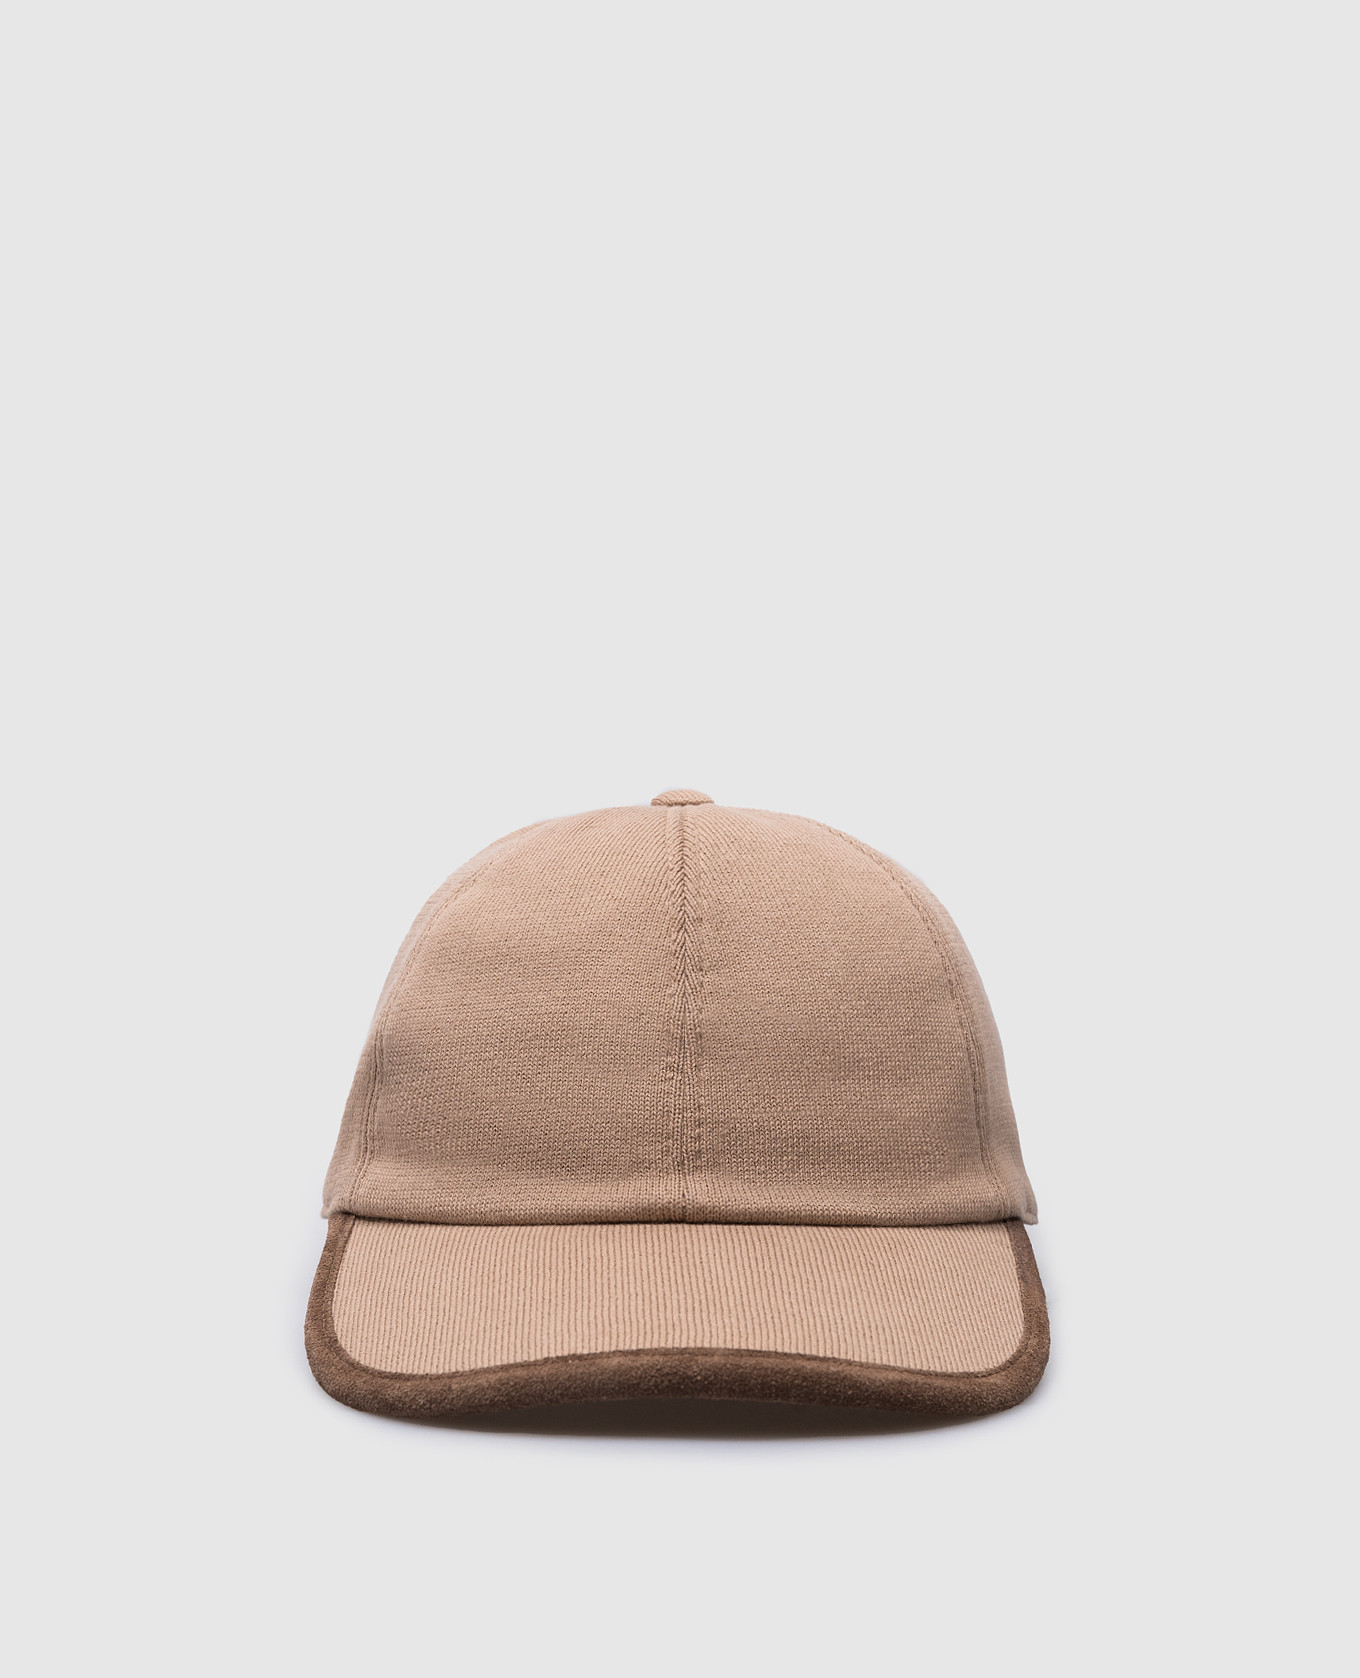 Brown cap with metal logo